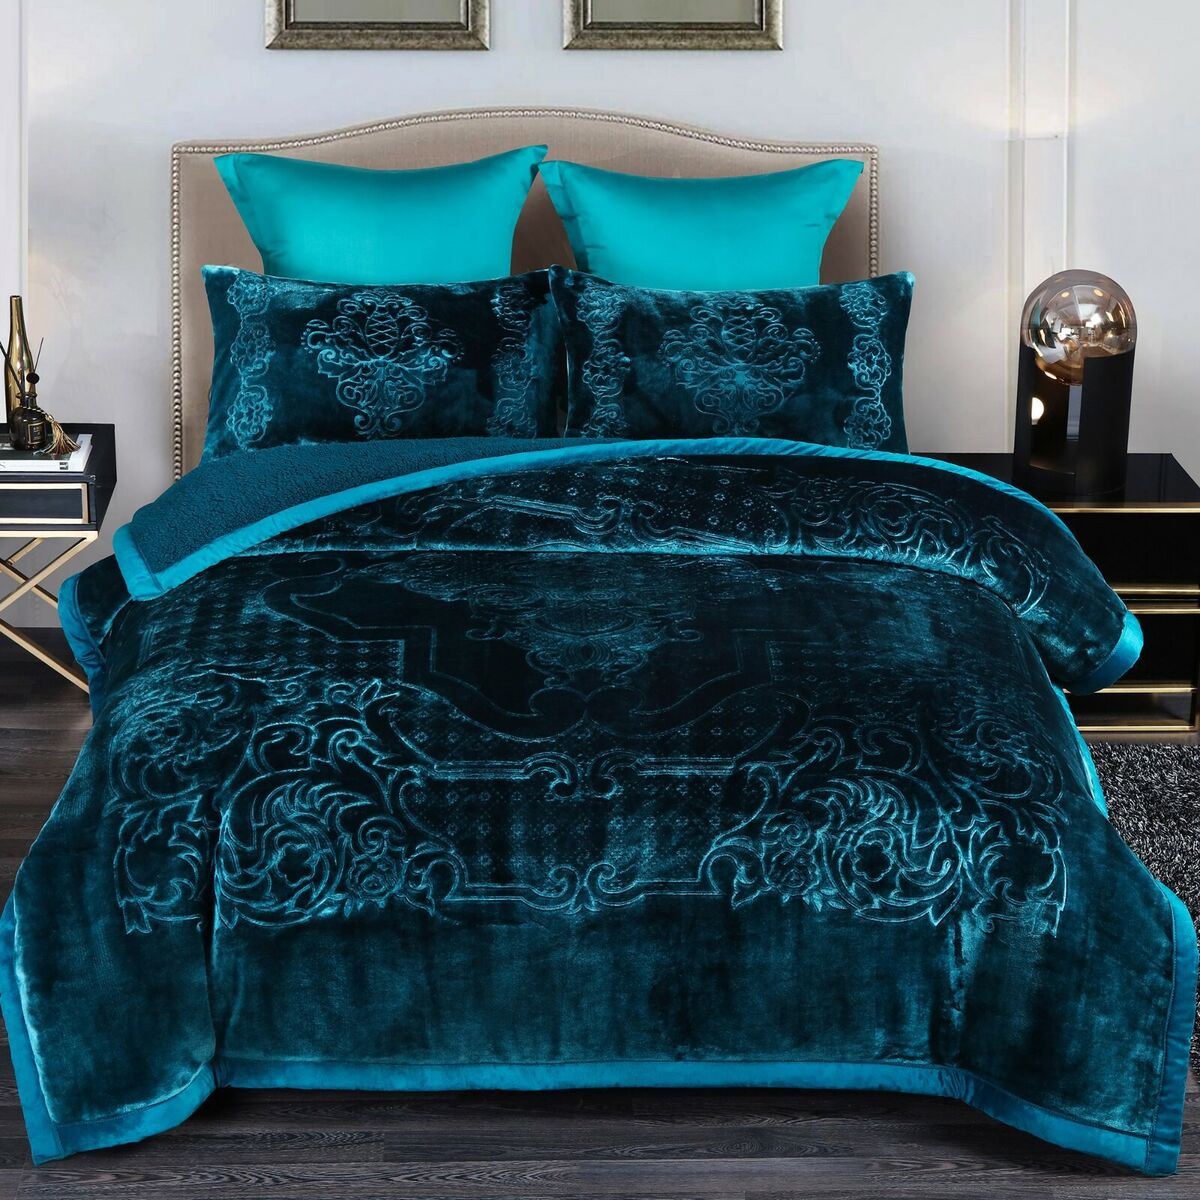 Heavy Korean Mink Blanket Sherpa Blanket Comforter Bed Blanket | eBay